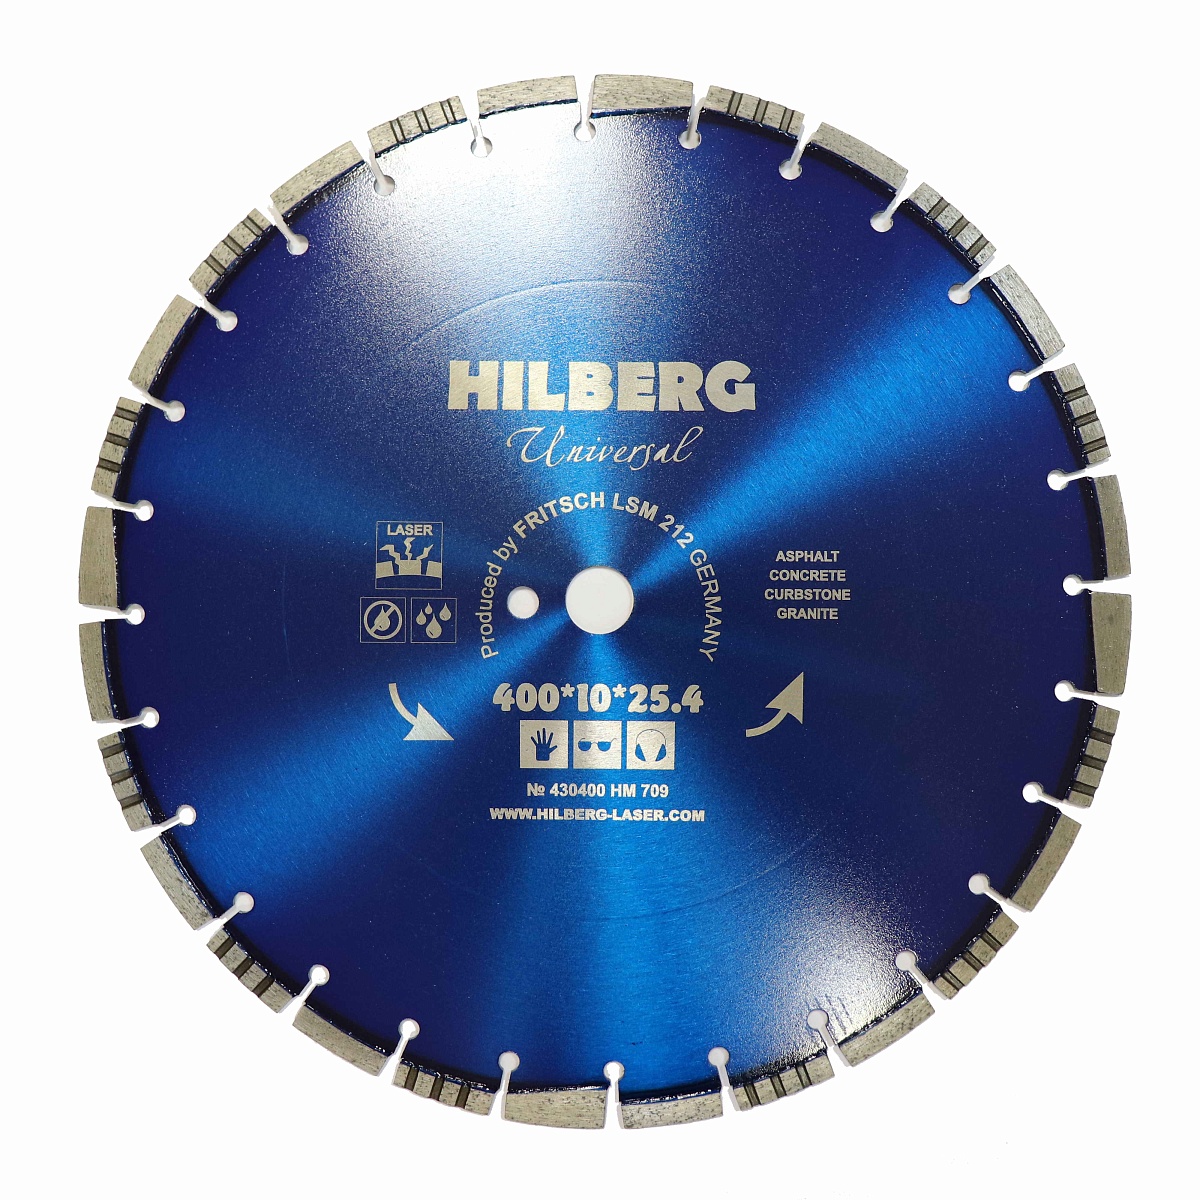 Hilberg турбо-сегментный серия Universal Laser